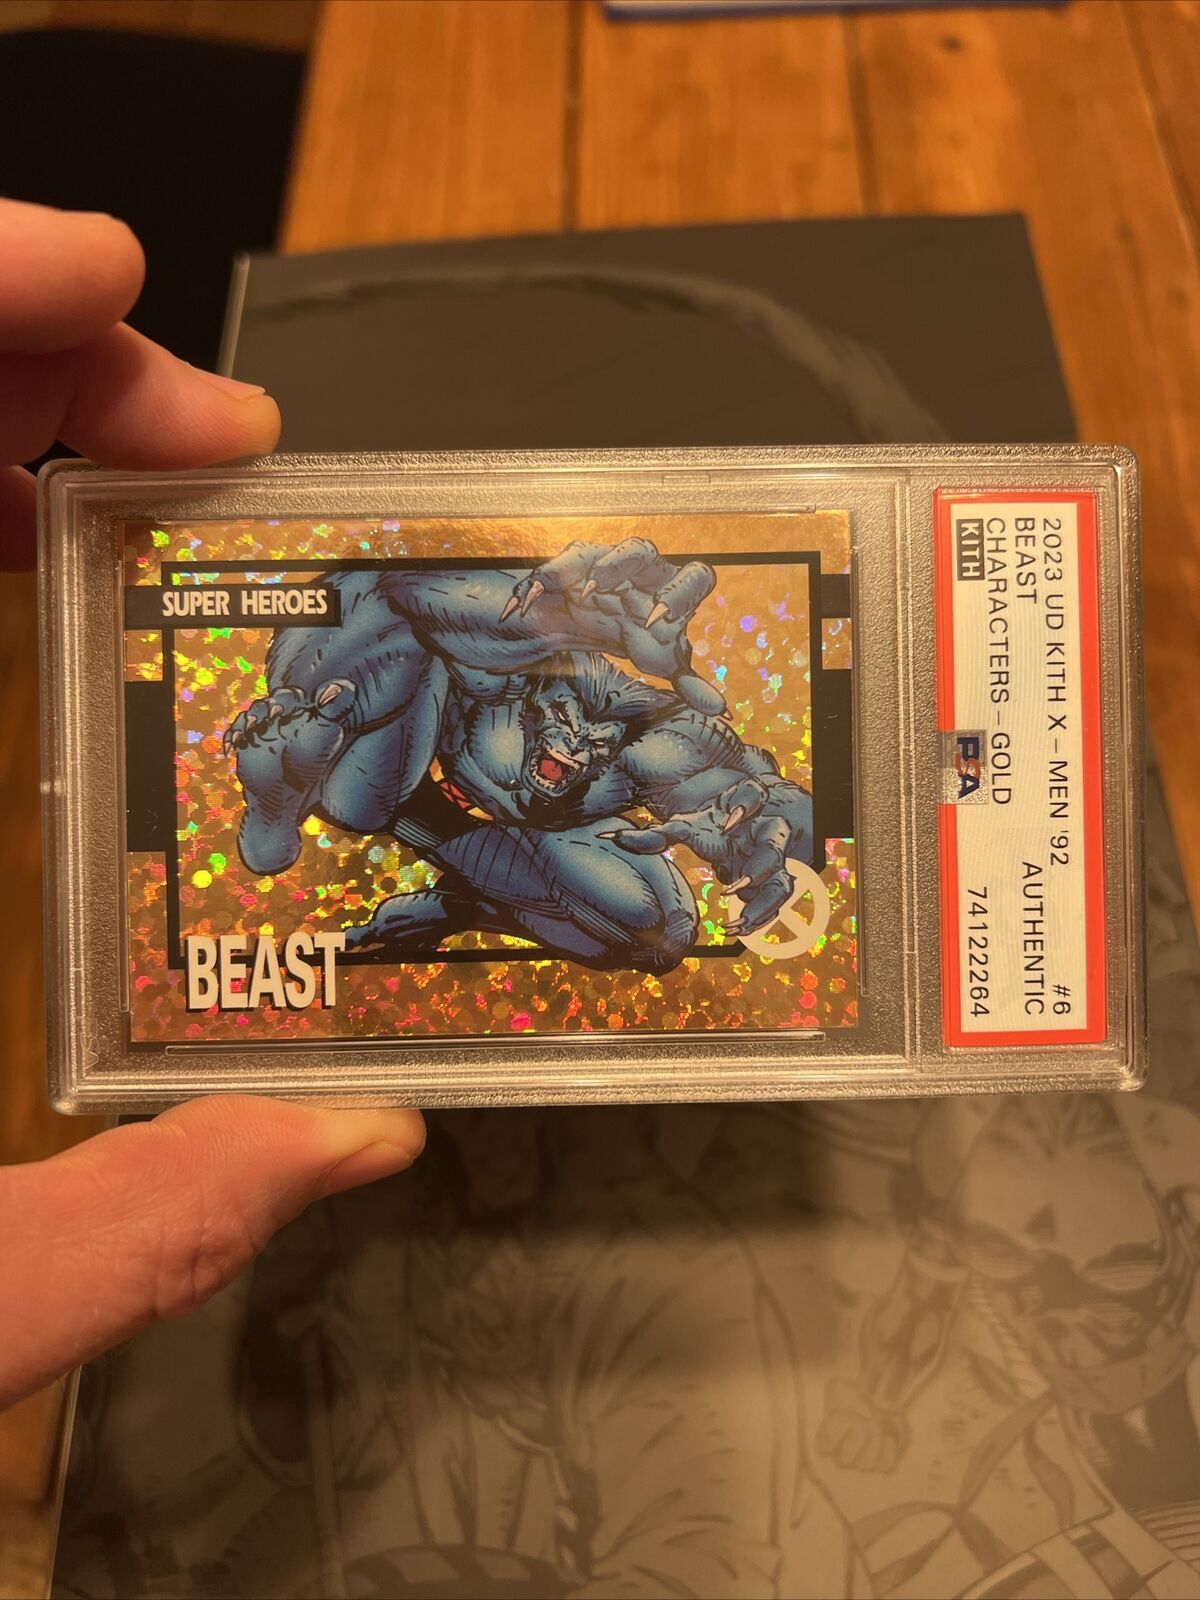 RARE LIMITED 2023 Beast 1992 GOLD Trading Card Kith x Marvel X-Men PSA 1/25